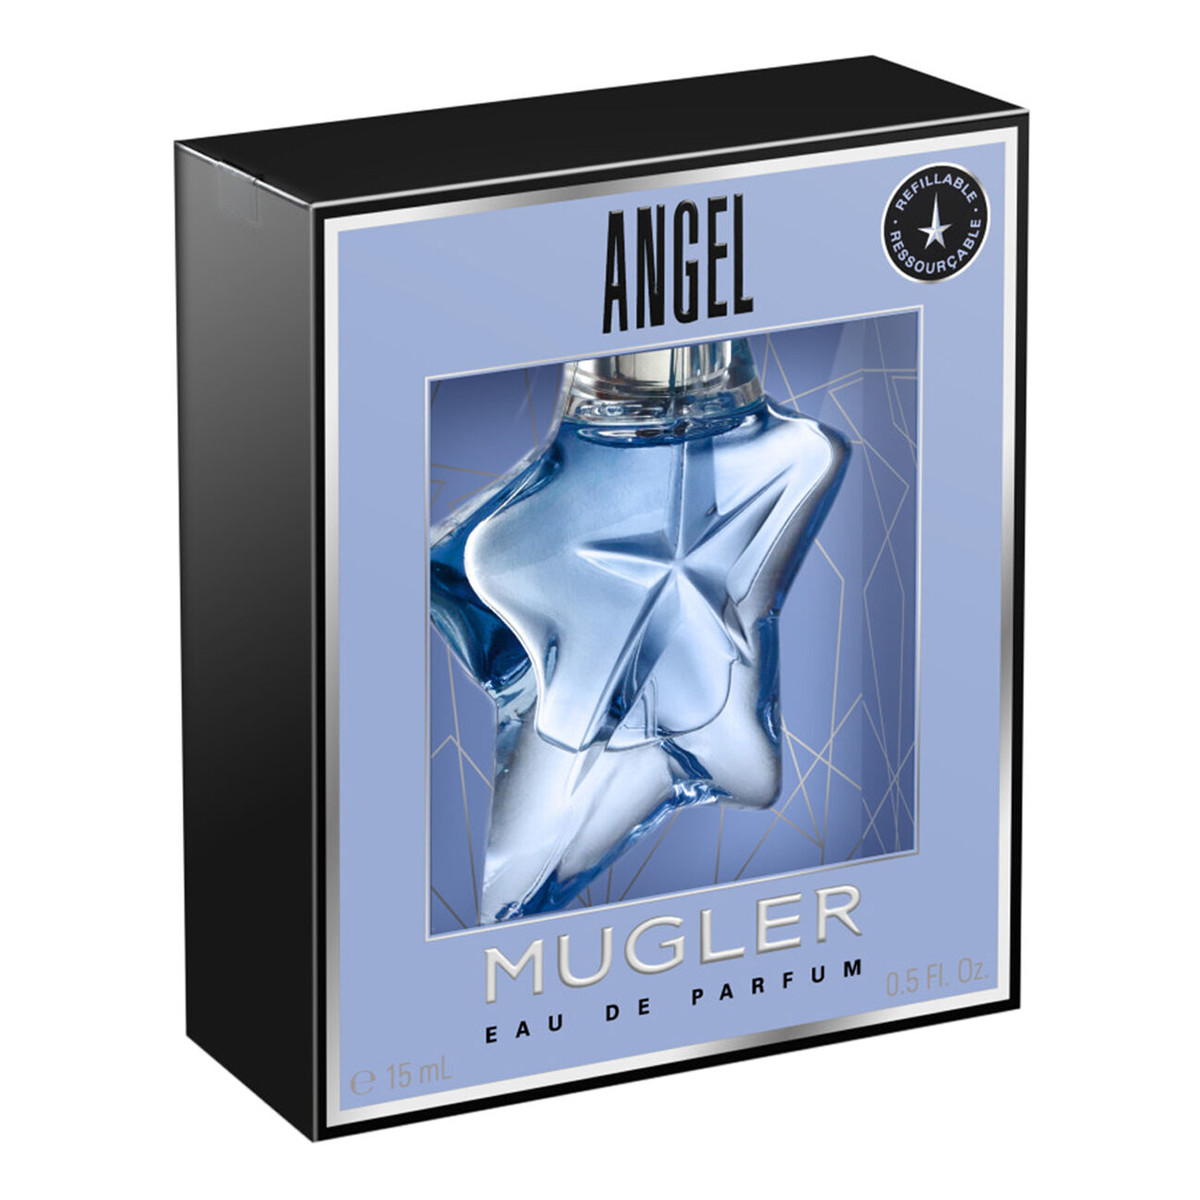 Thierry Mugler Angel Woda perfumowana refillable spray 15ml